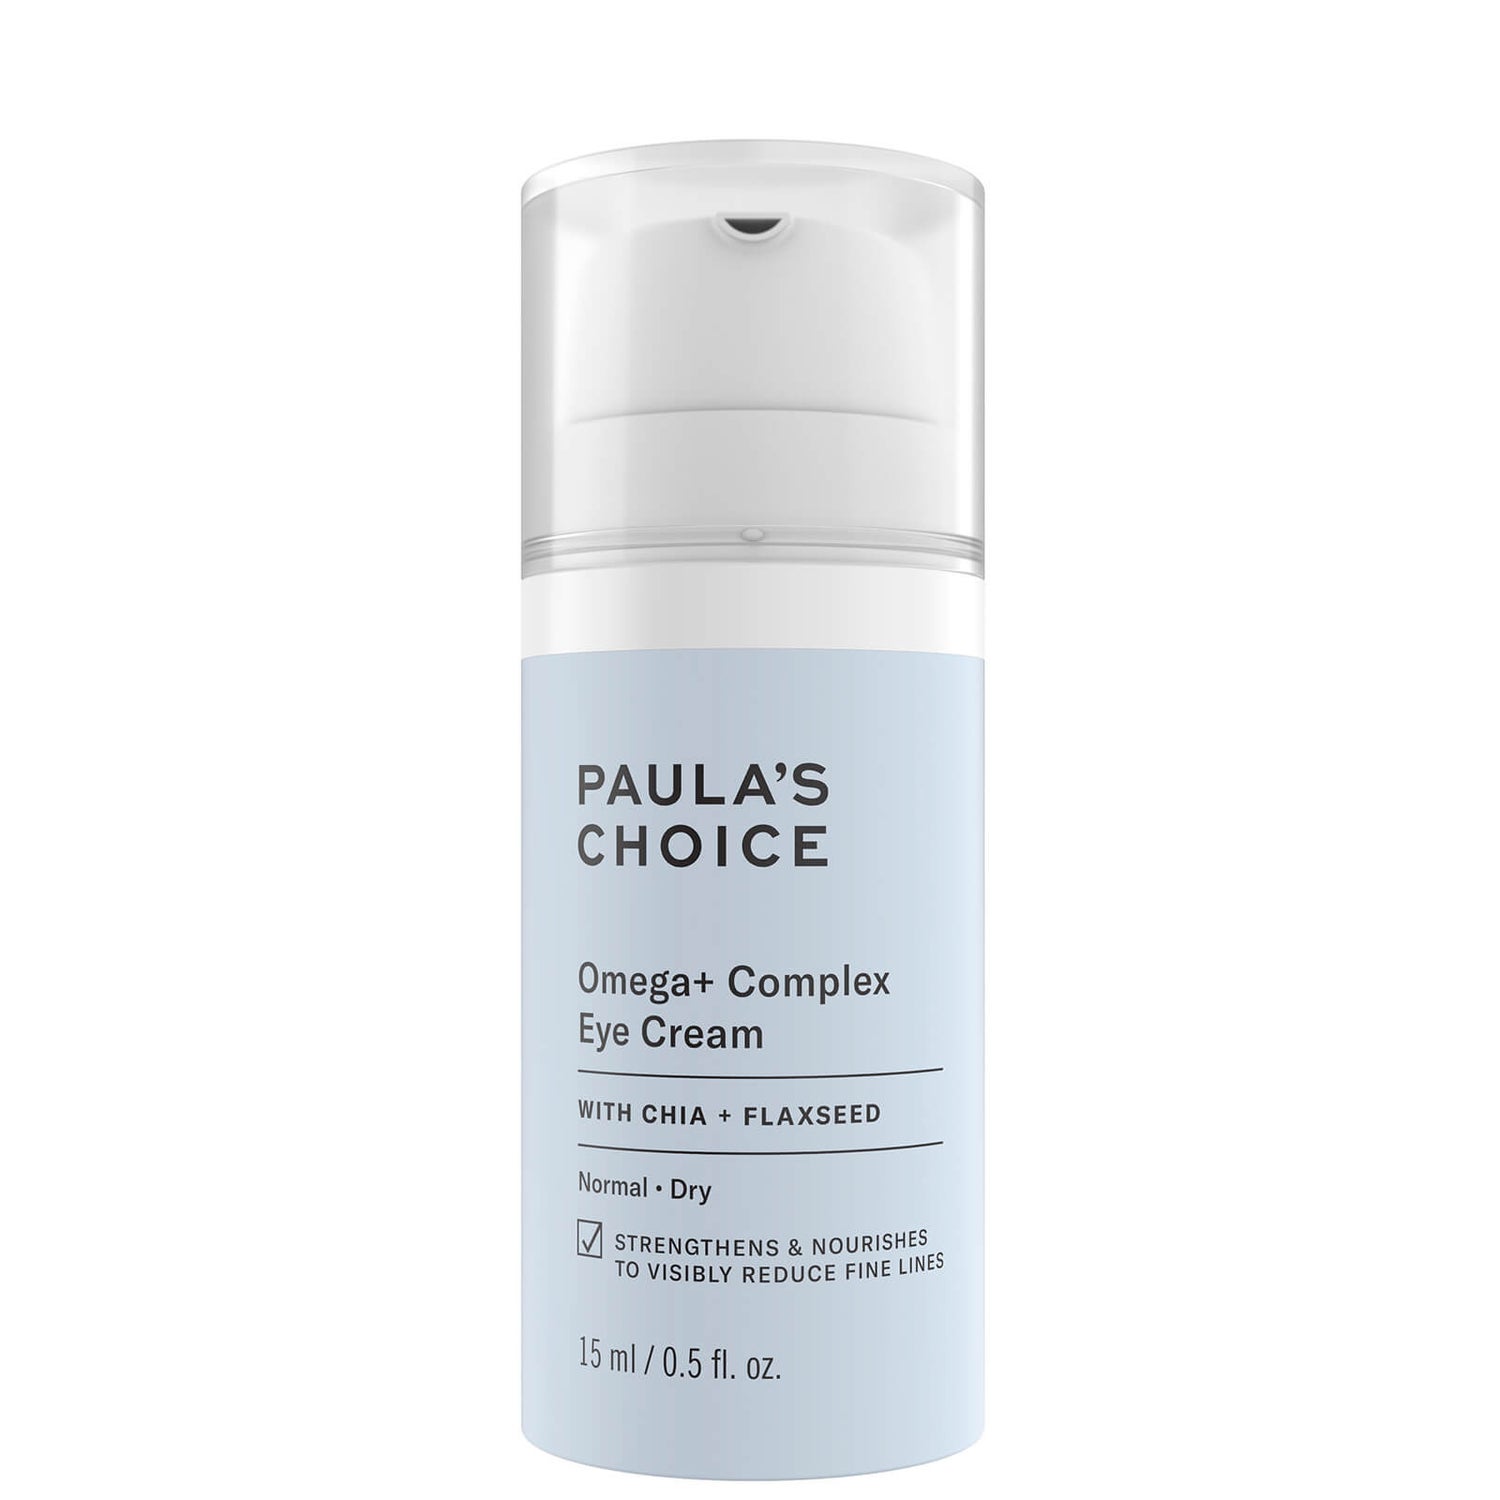 Paula's Choice Omega+ Complex Eye Cream (0.5 fl. oz.)